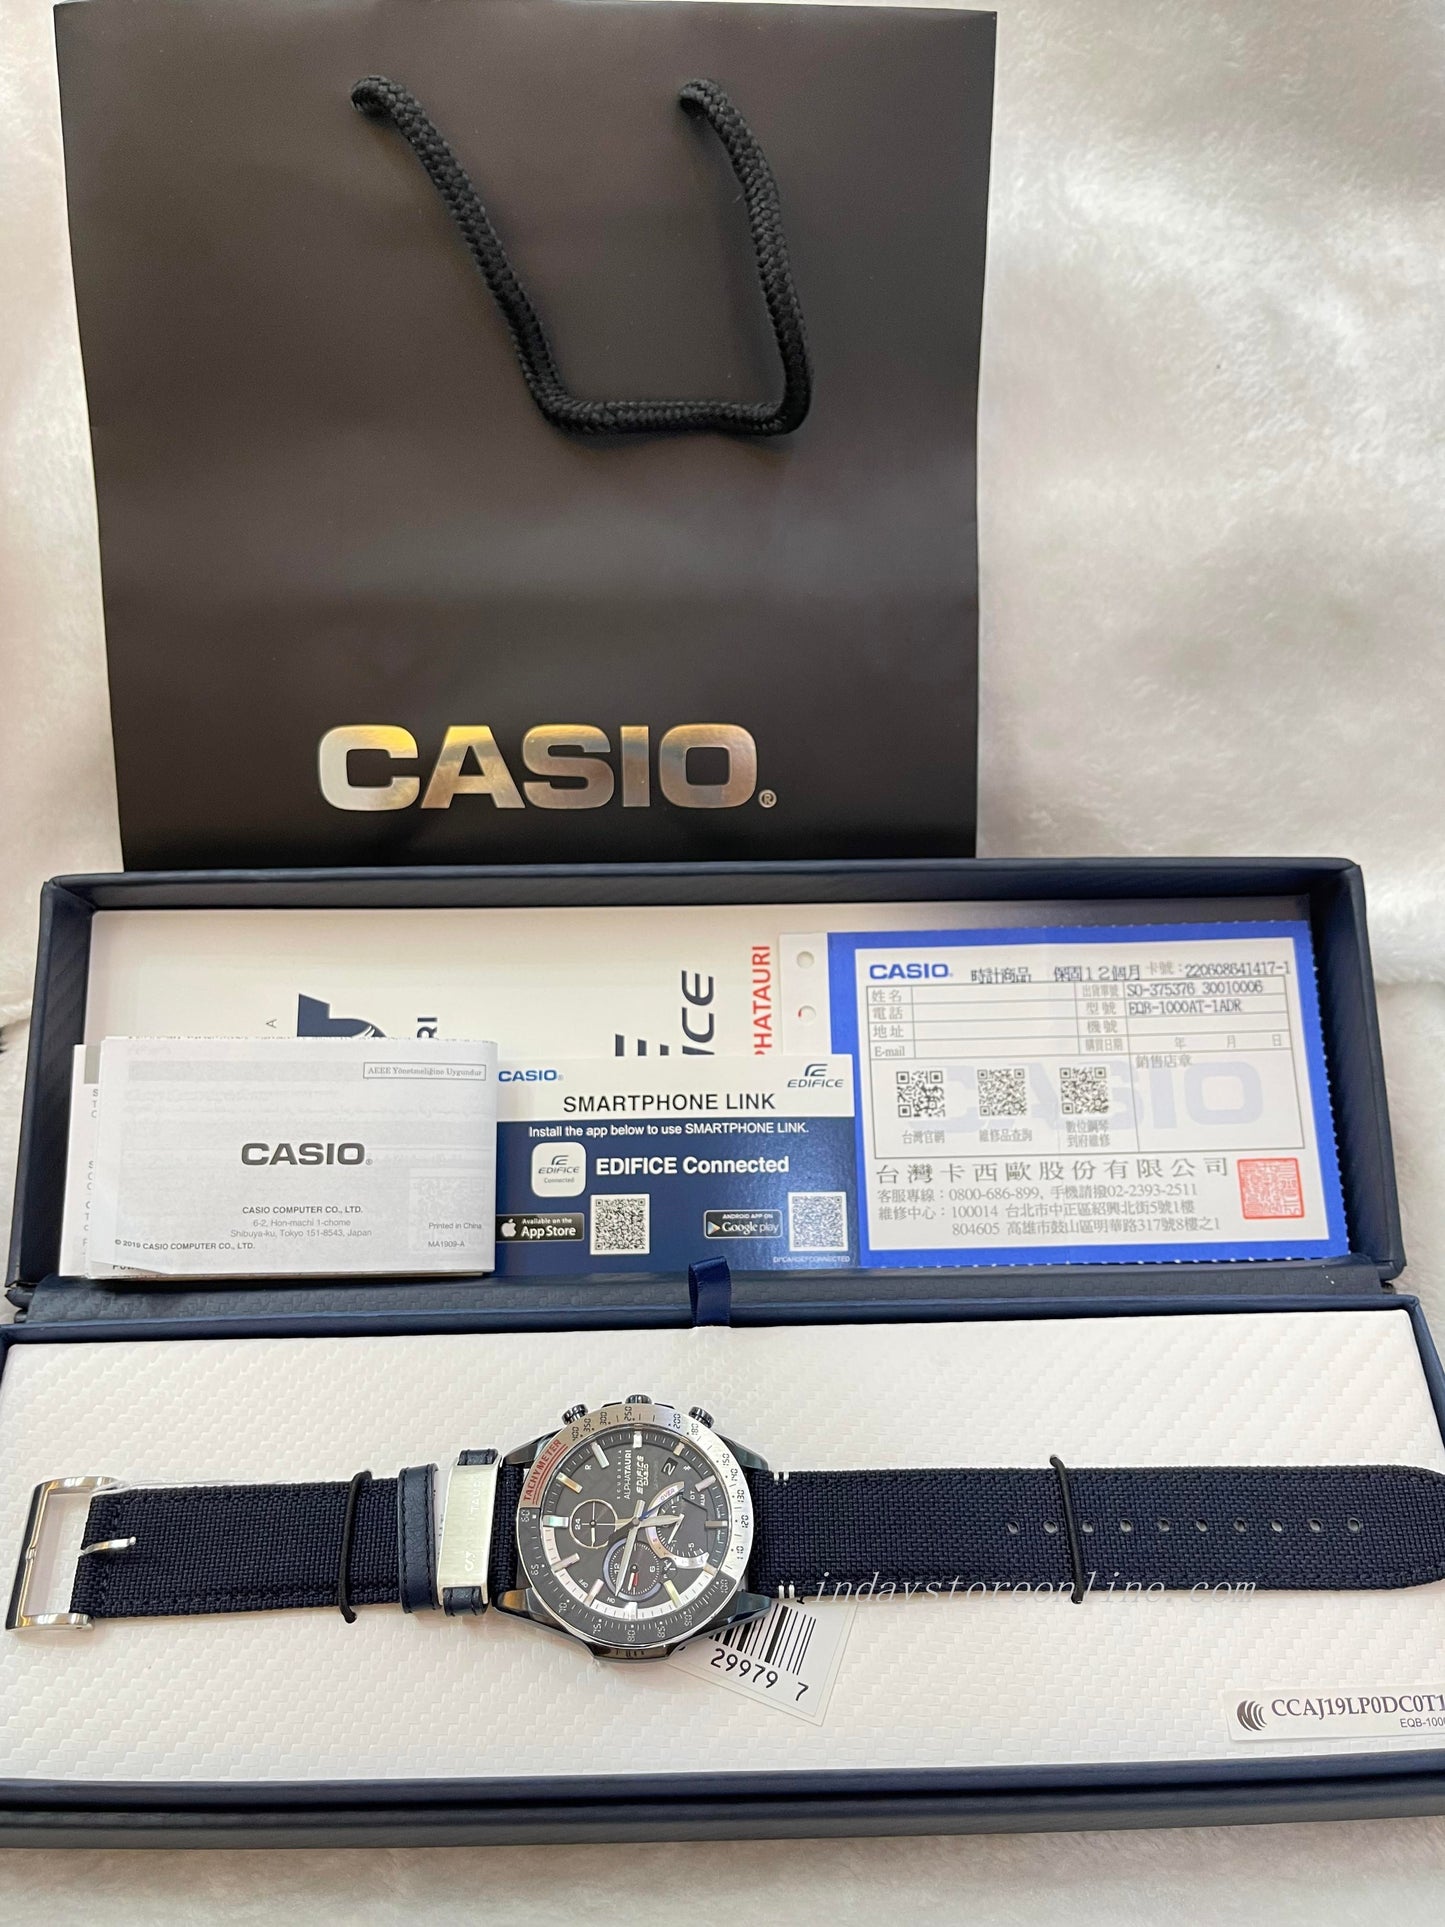 Casio Edifice Men's Watch EQB-1000AT-1A